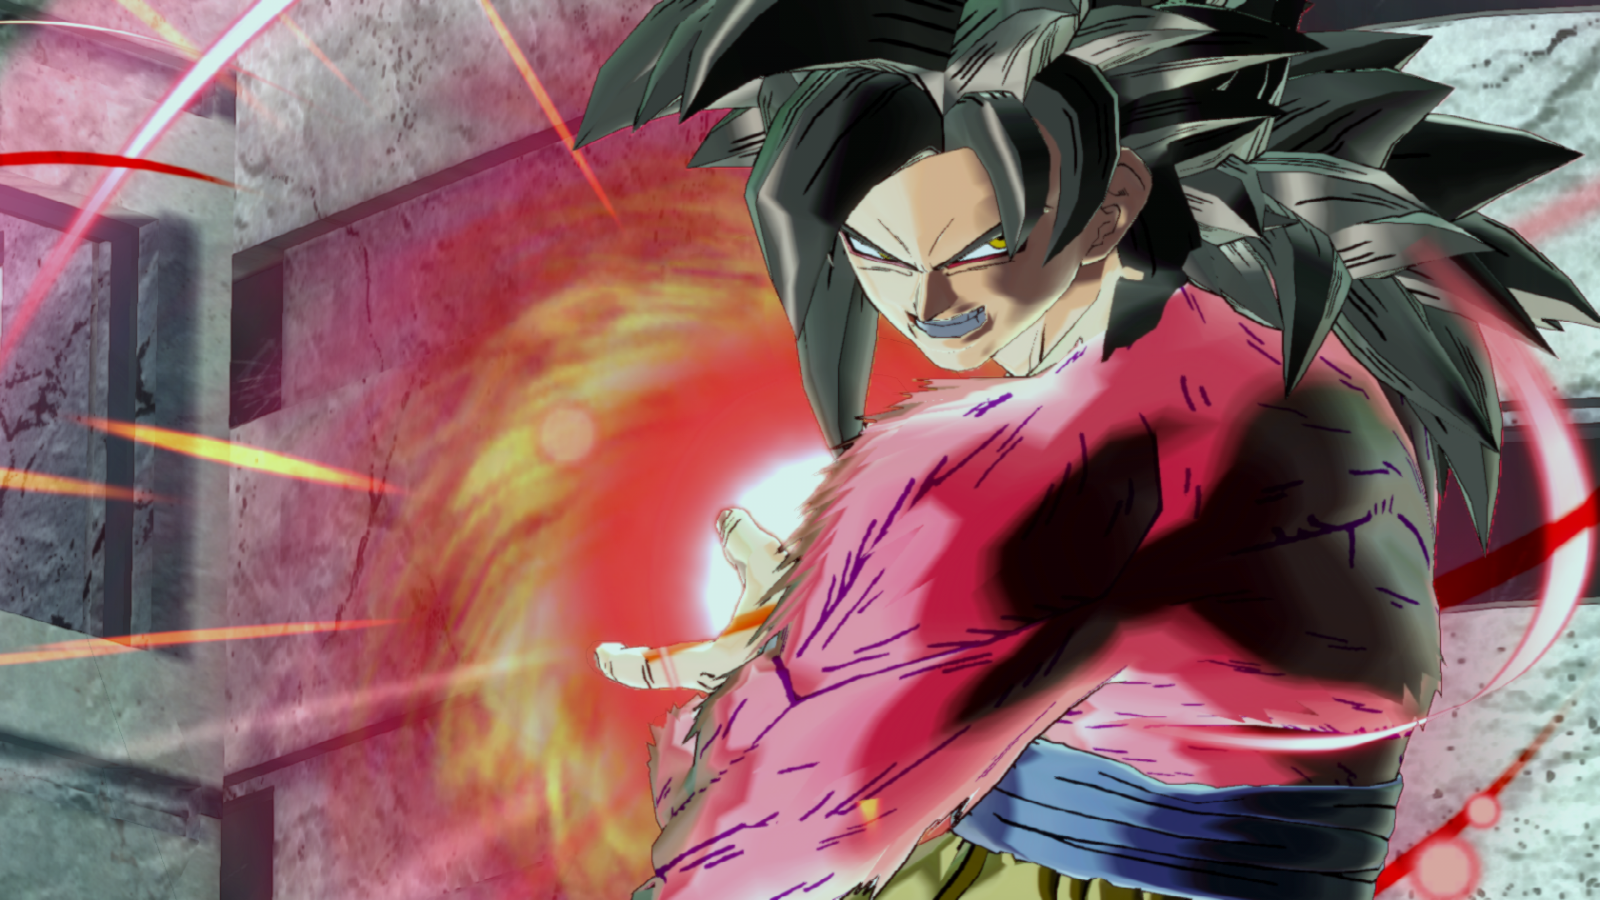 New SSJ4 Goku & Vegeta Duo Animation in Dragon Ball Xenoverse 2 Mods!